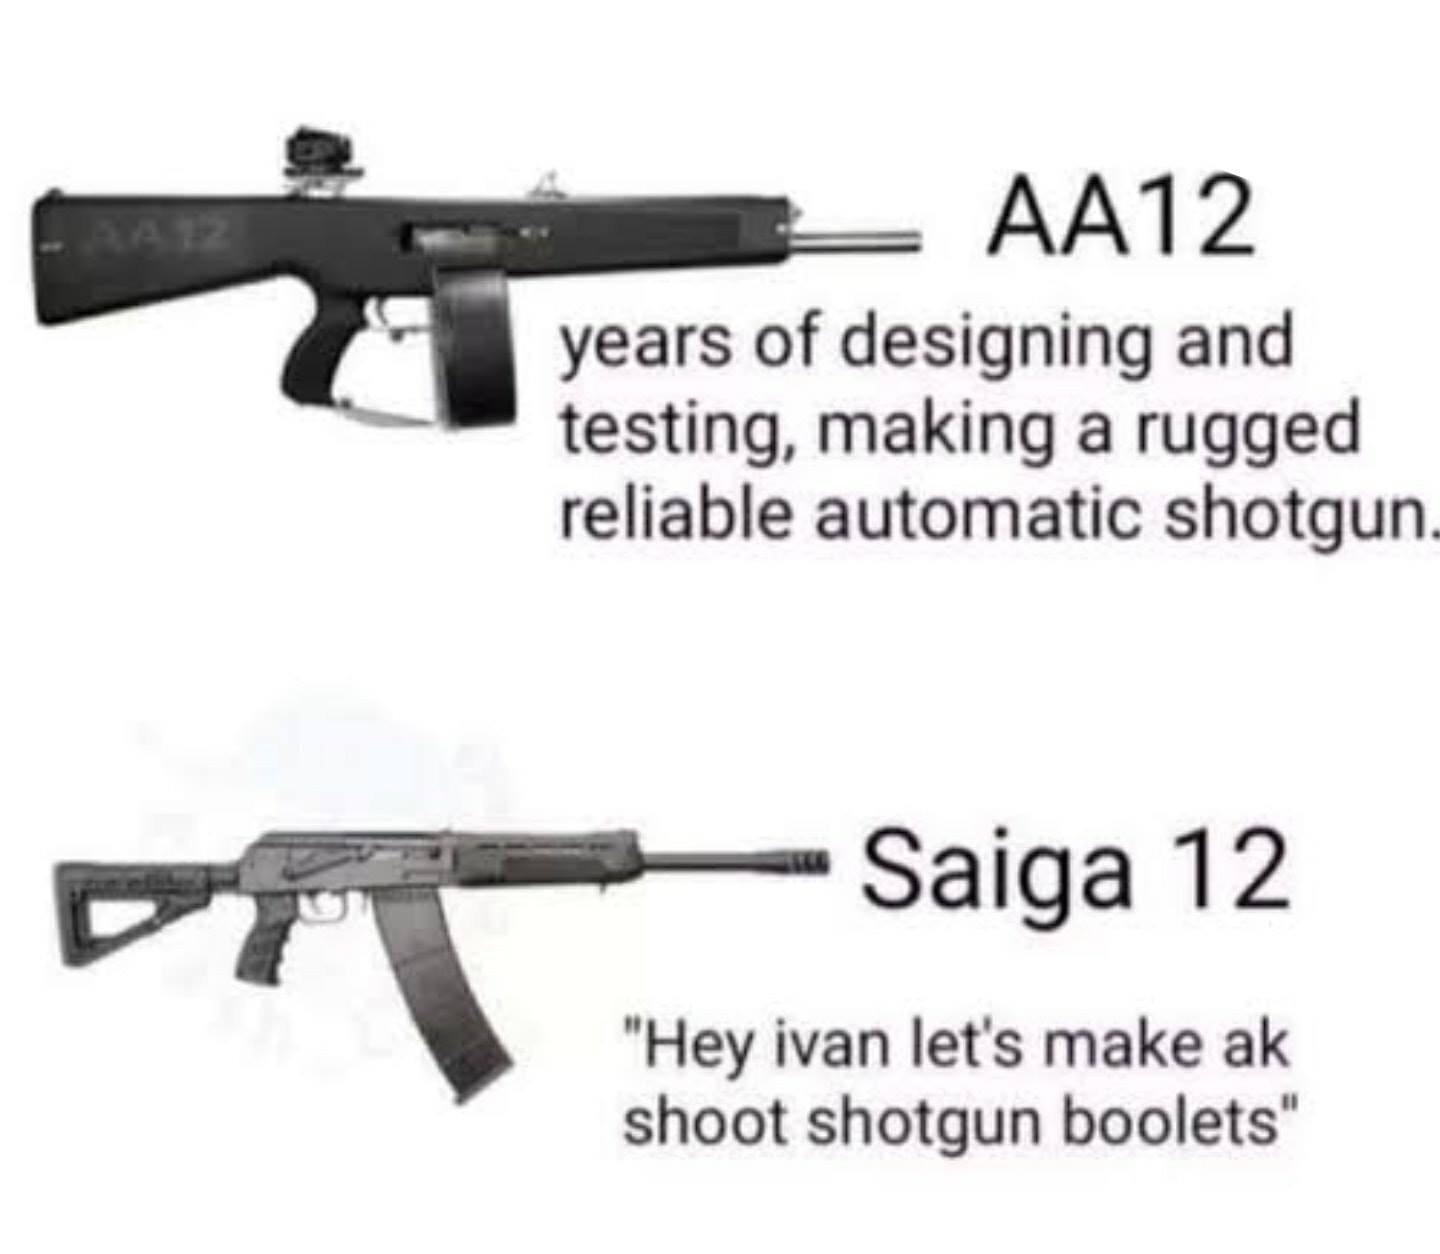 saiga 12 meme - AA12 years of designing and testing, making a rugged reliable automatic shotgun. Saiga 12 "Hey ivan let's make ak shoot shotgun boolets"